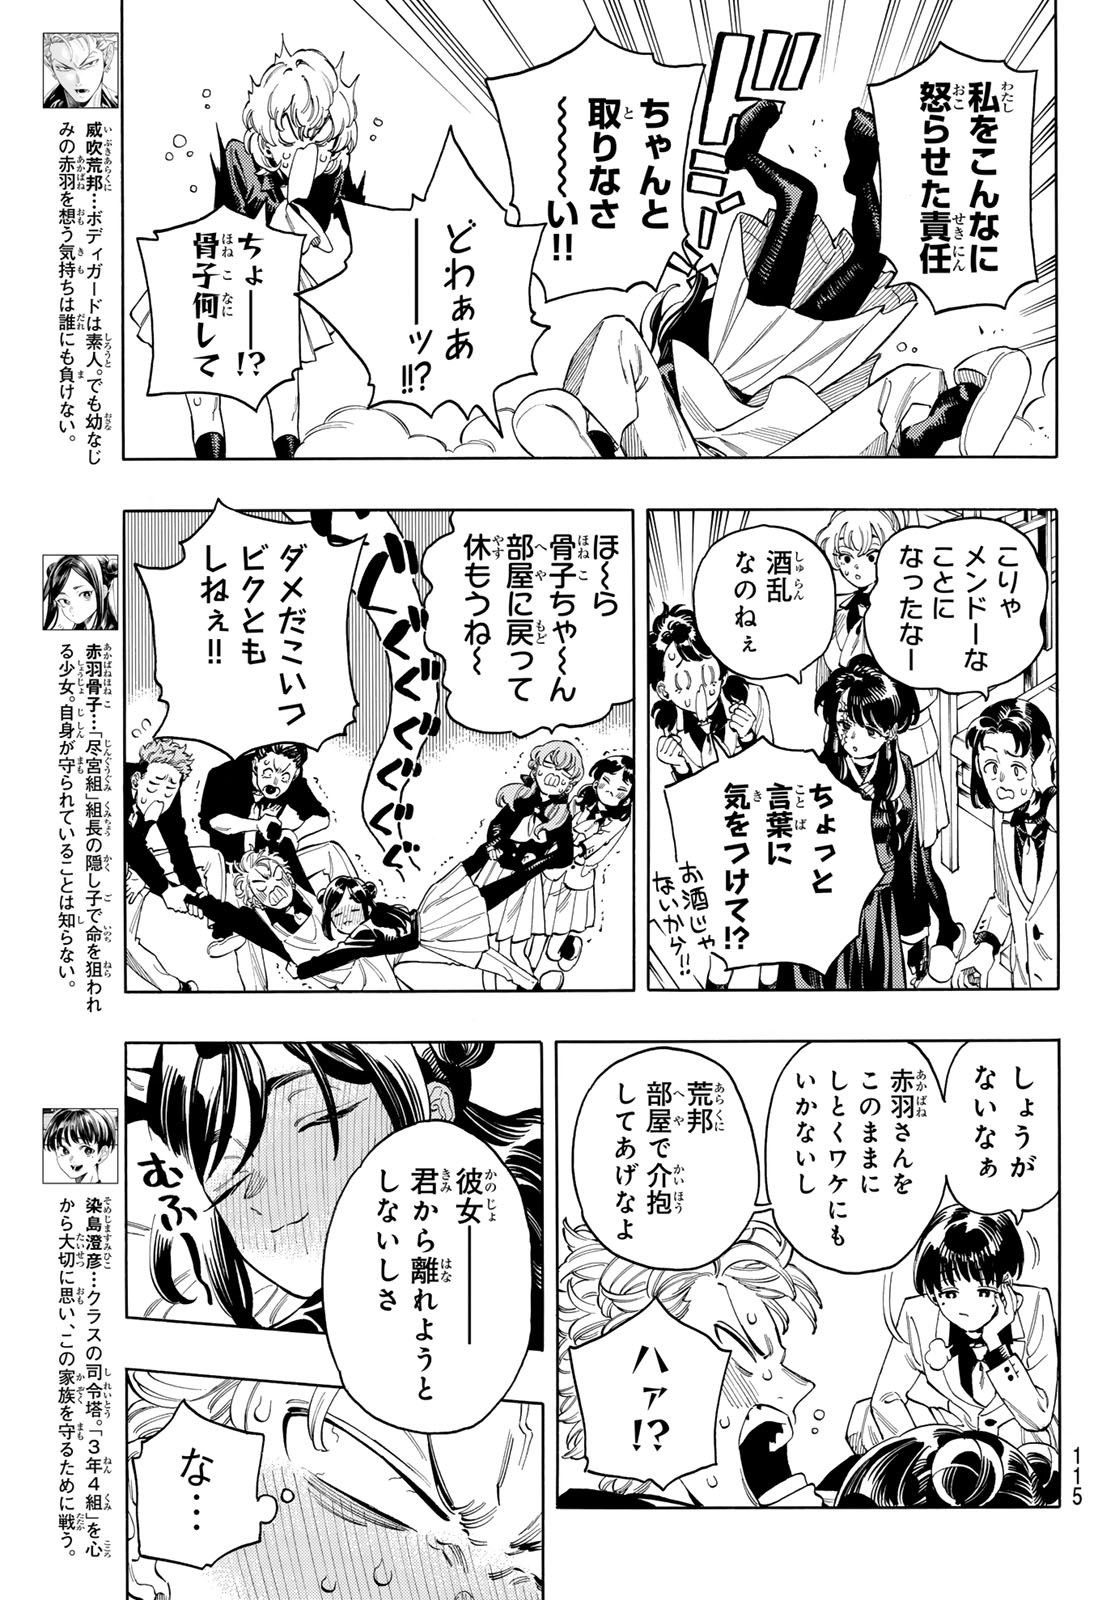 Akabane Honeko no Bodyguard - Chapter 87 - Page 4